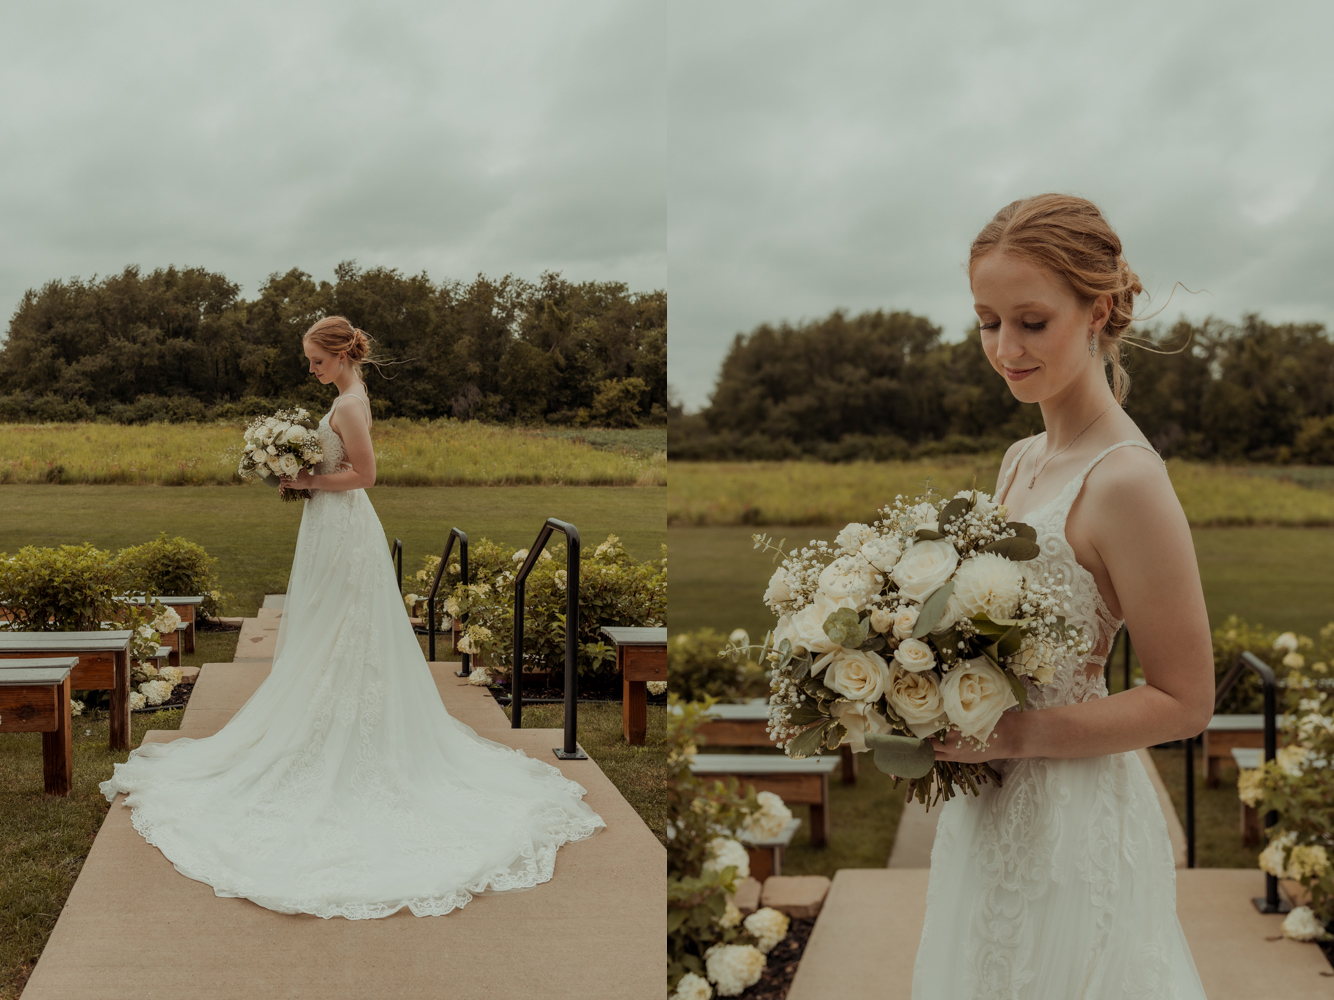 Ashton Hill Farm Wedding Pictures, Cedar Rapids, Iowa